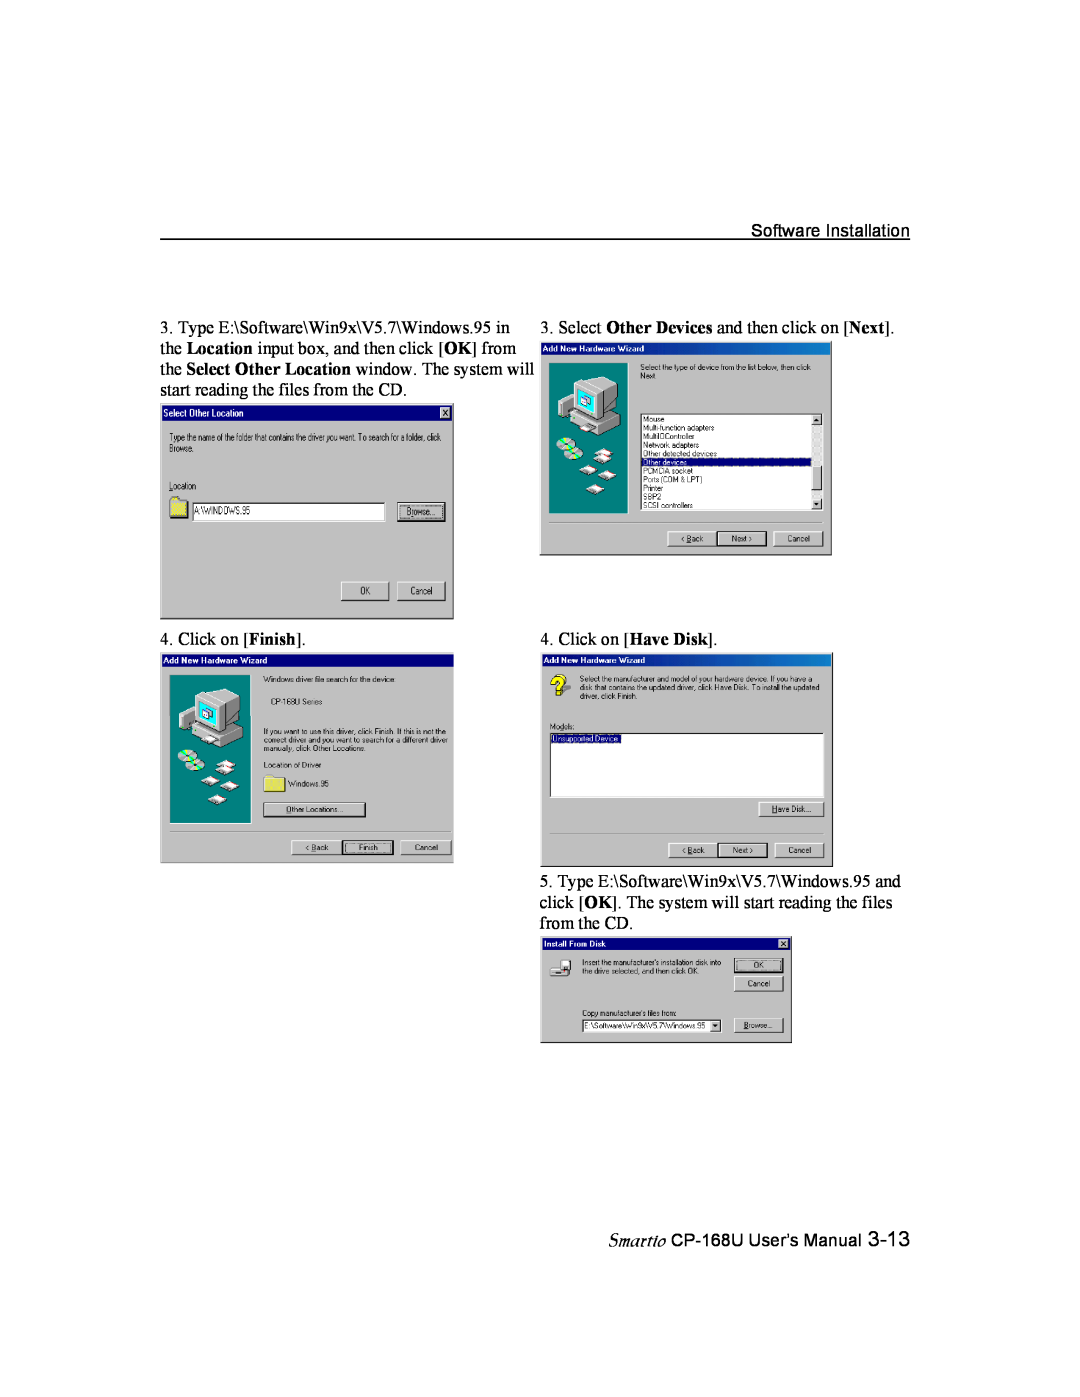 Moxa Technologies CP-168U user manual Click on Finish 